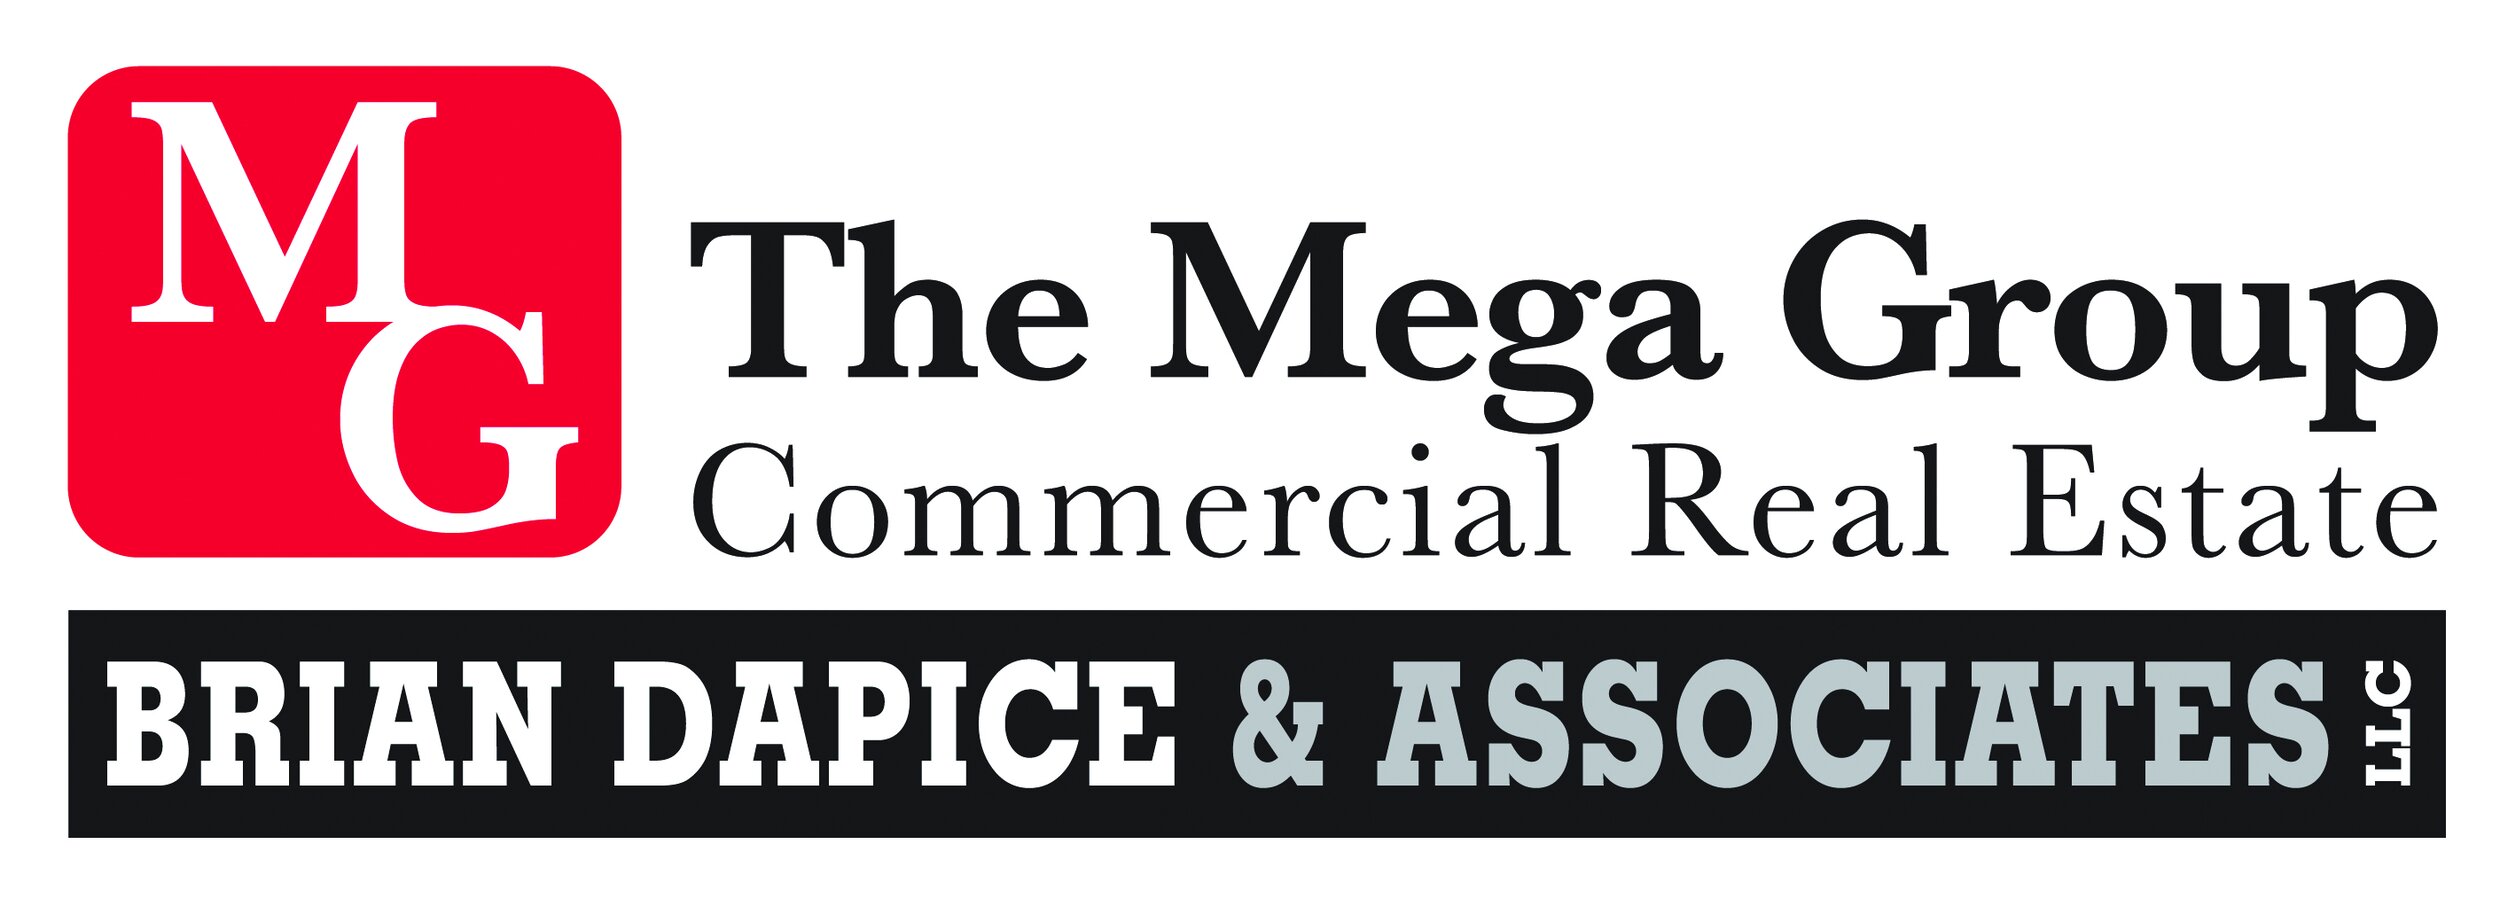 MEGAGROUP_logo4C.jpg